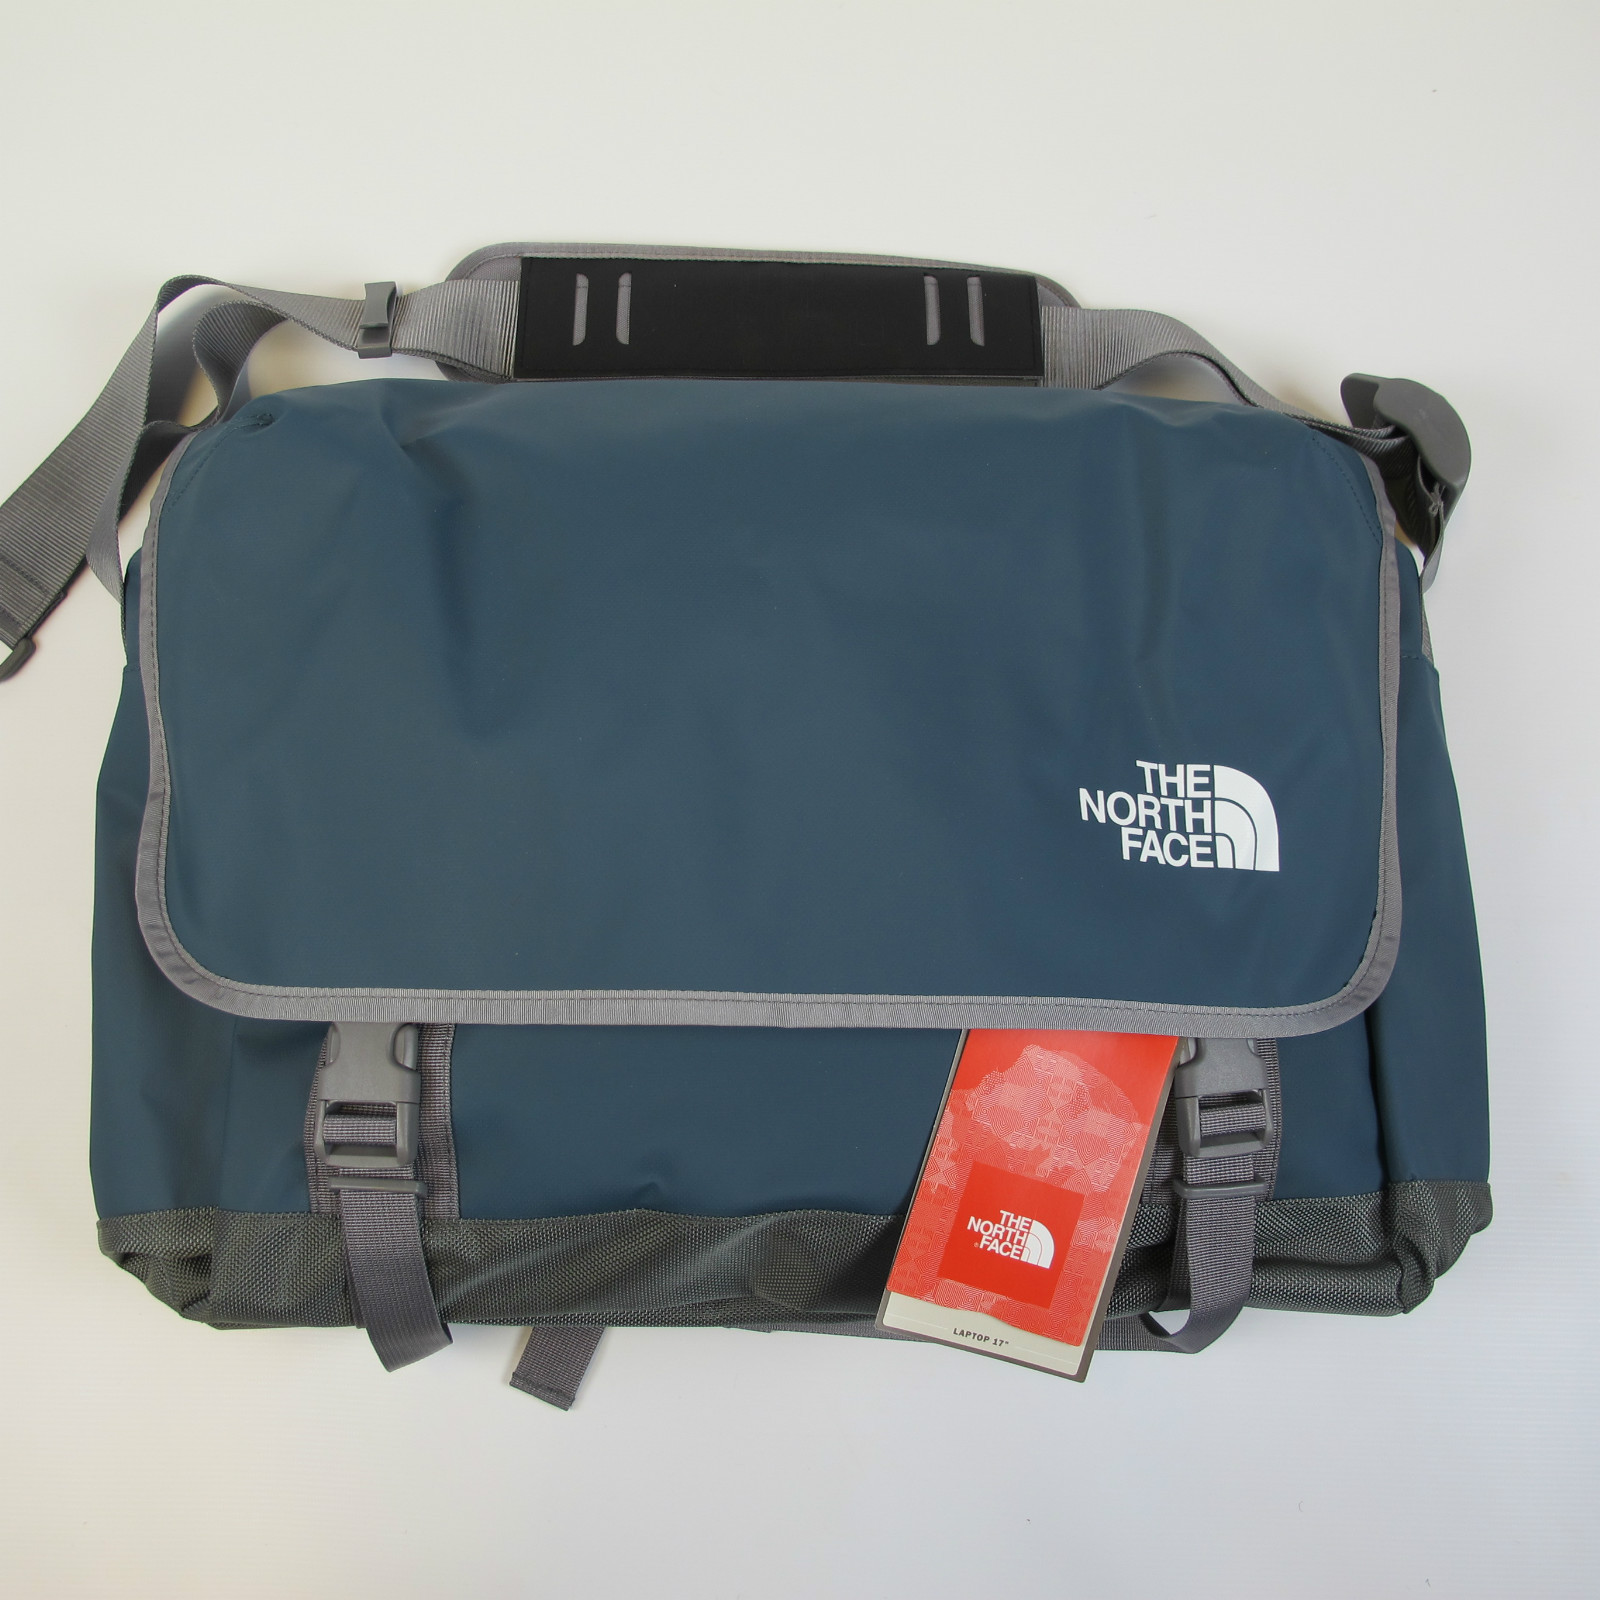 Bicifissa: The North Face Messenger Bag